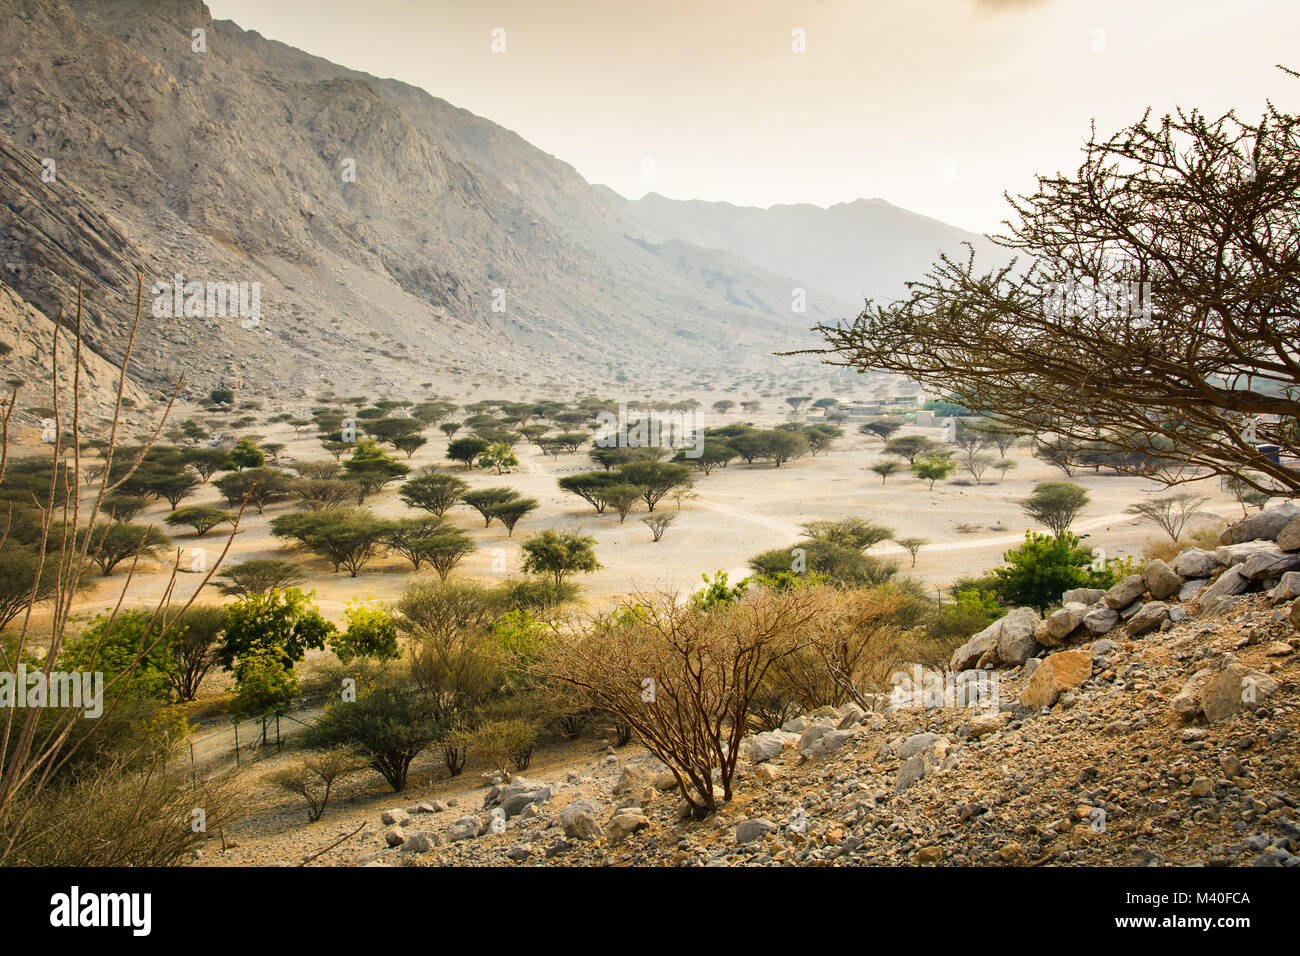 Jabal Jais mountain and desert landscape near Ras al Khaimah, UAE Stock Photo